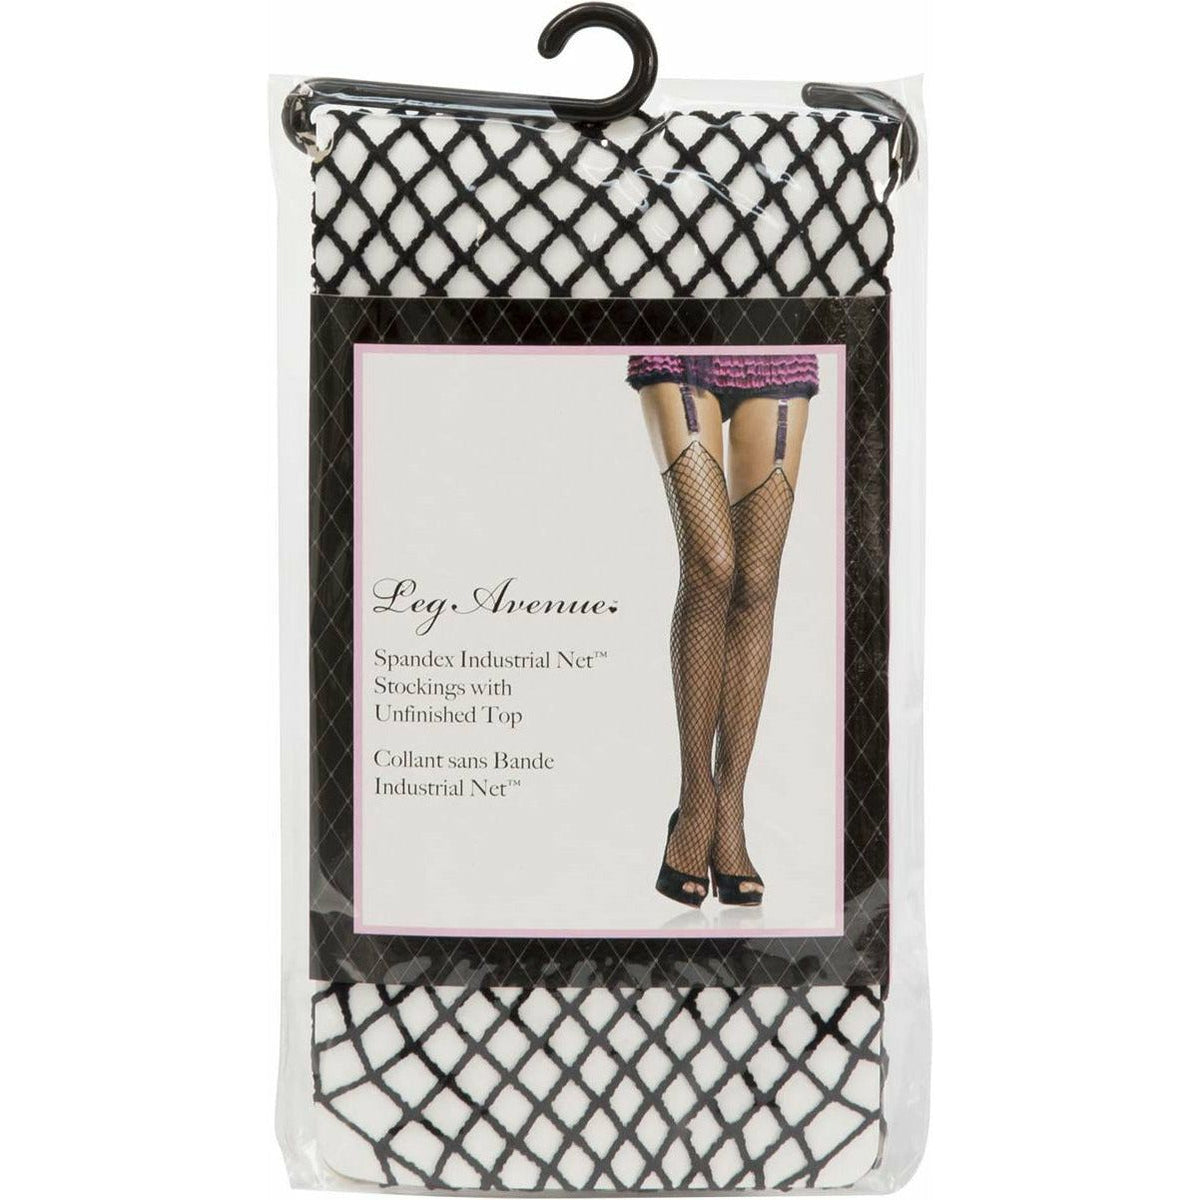 Leg Avenue Spandex Industrial Net Stockings - Black - One Size